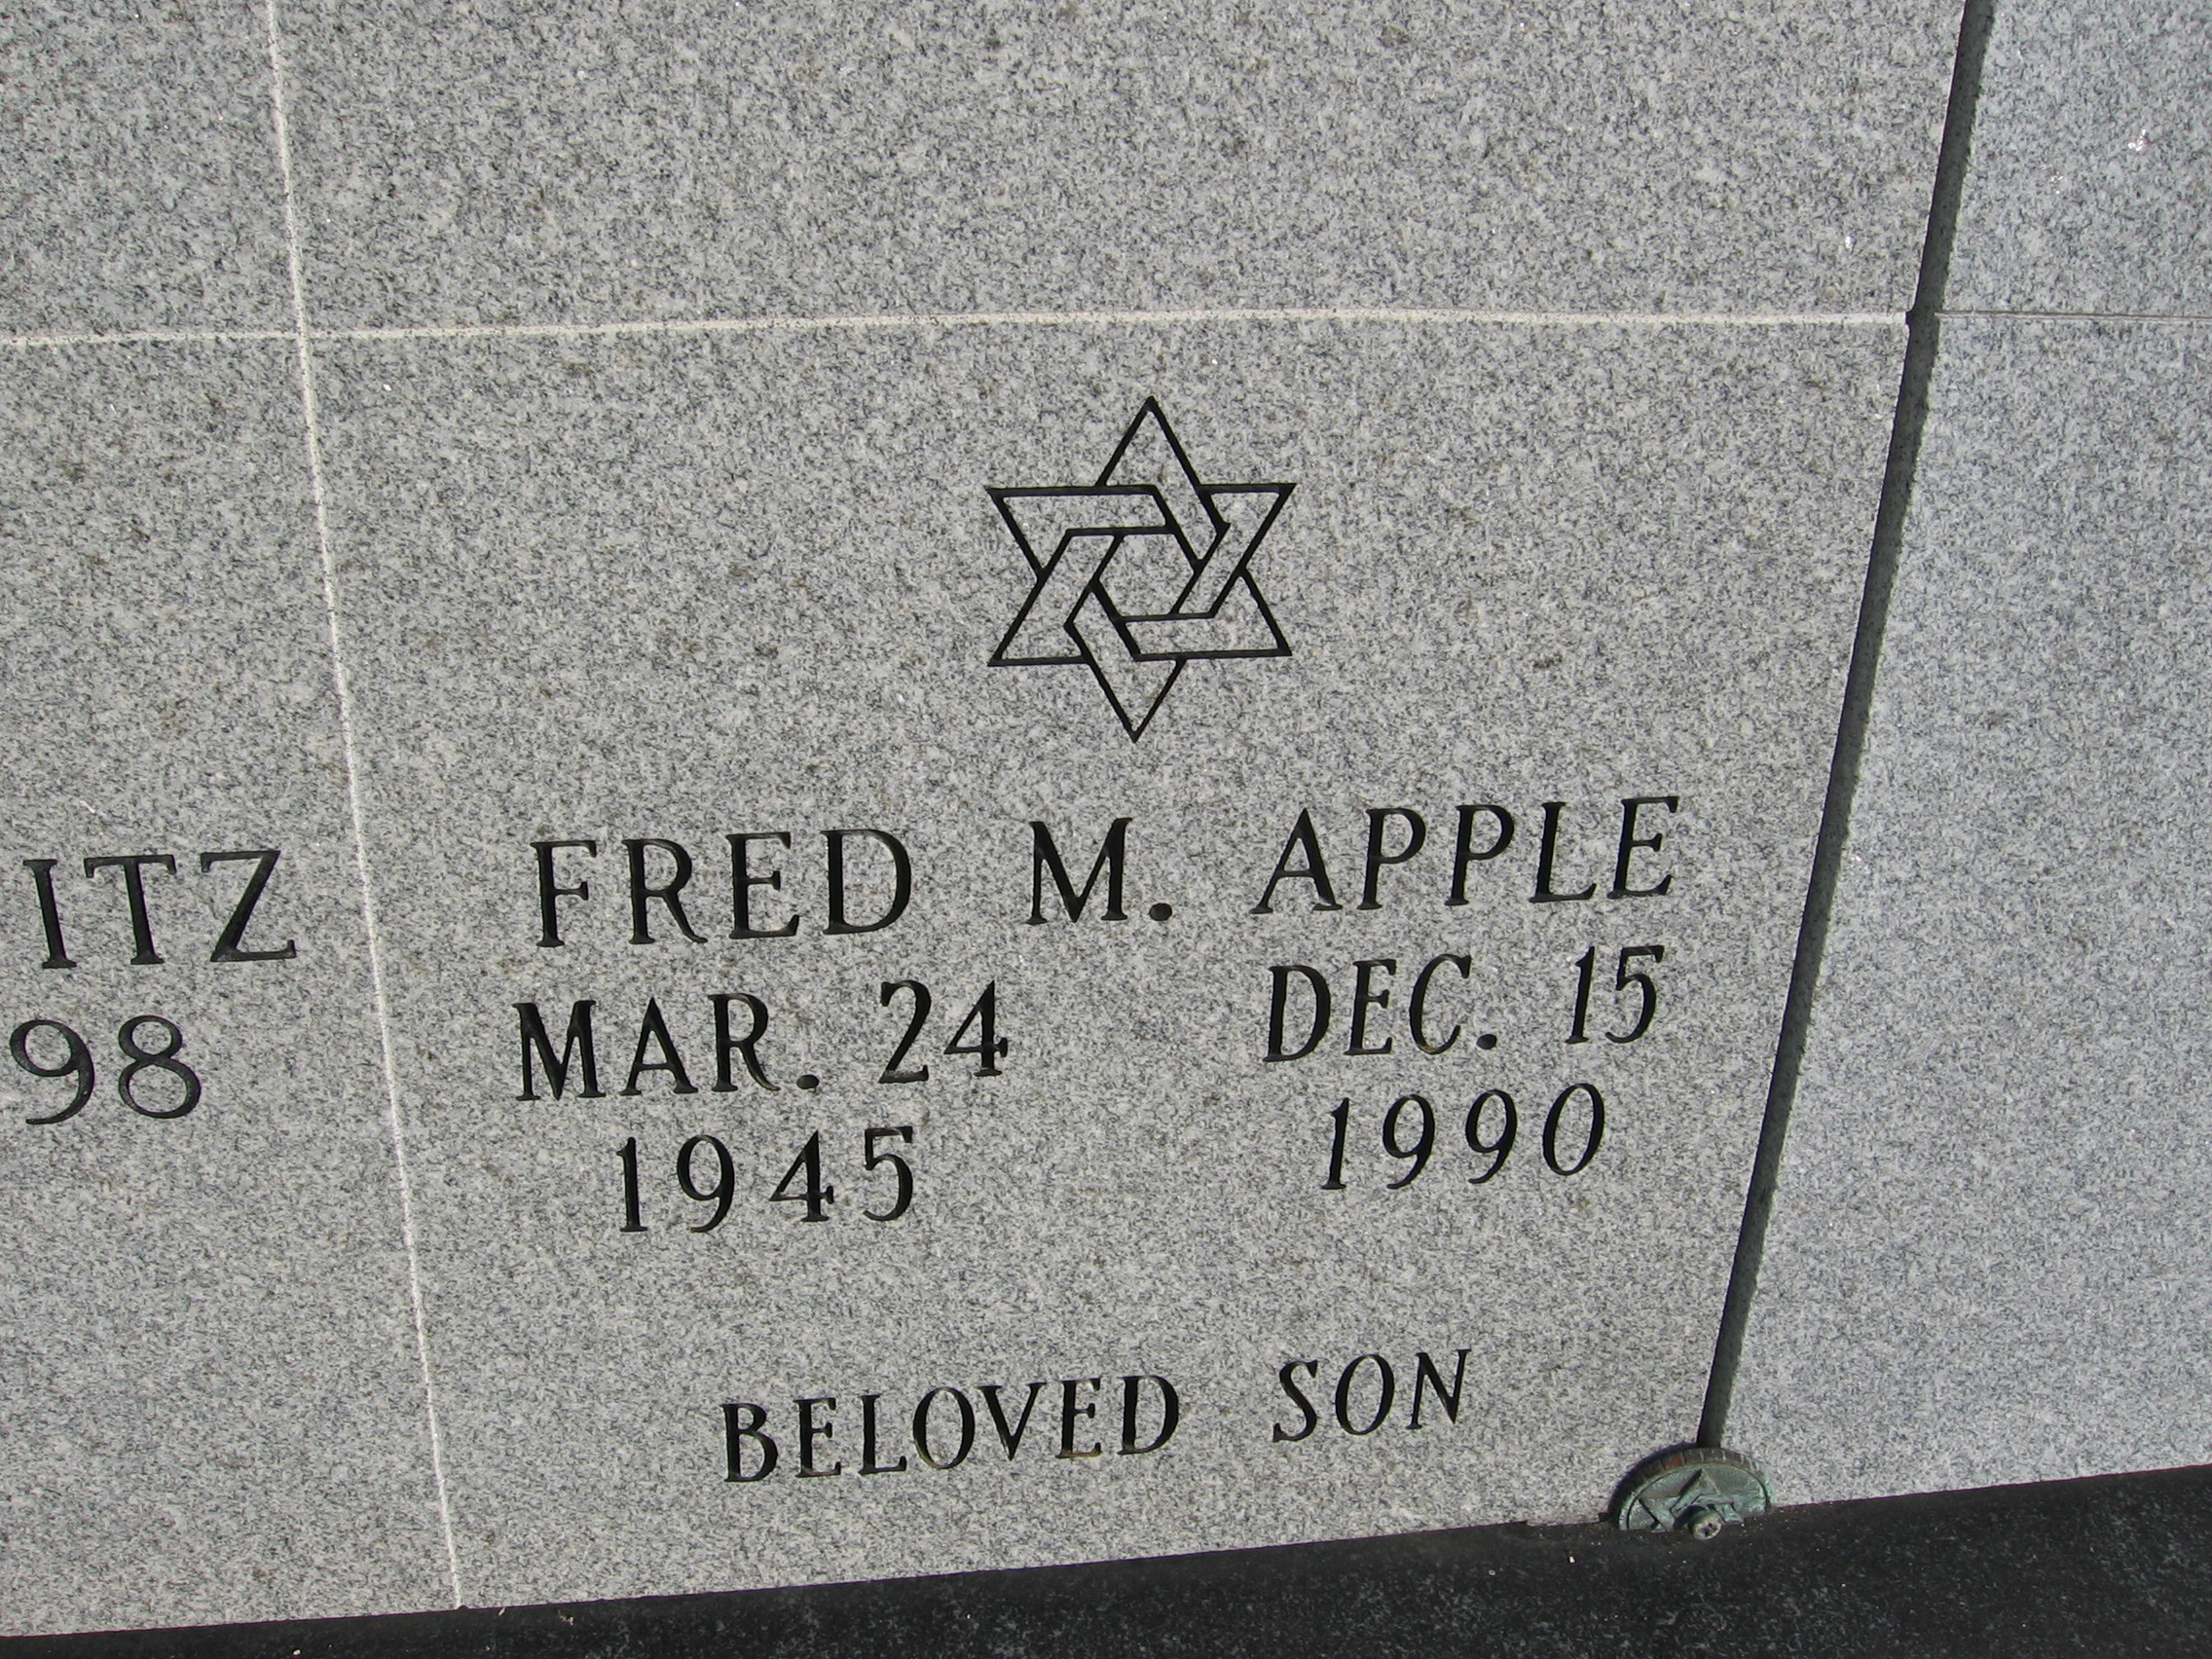 Fred M Apple